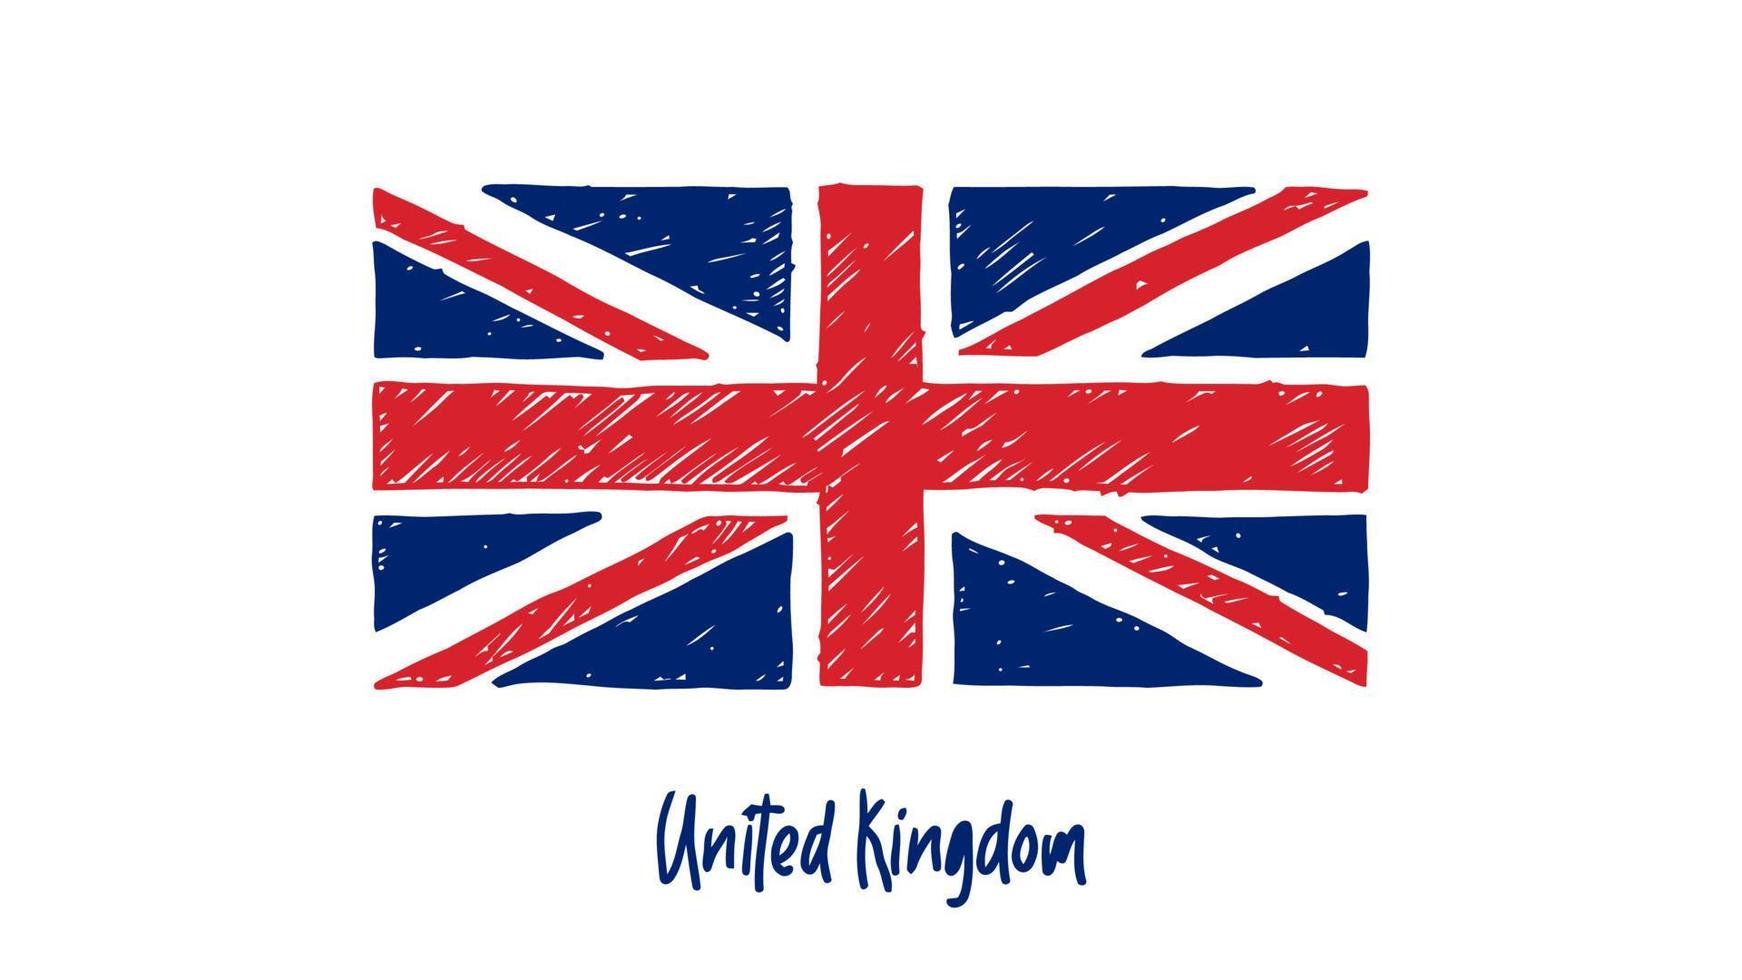 United Kingdom National Country Flag Marker or Pencil Sketch Illustration Vector